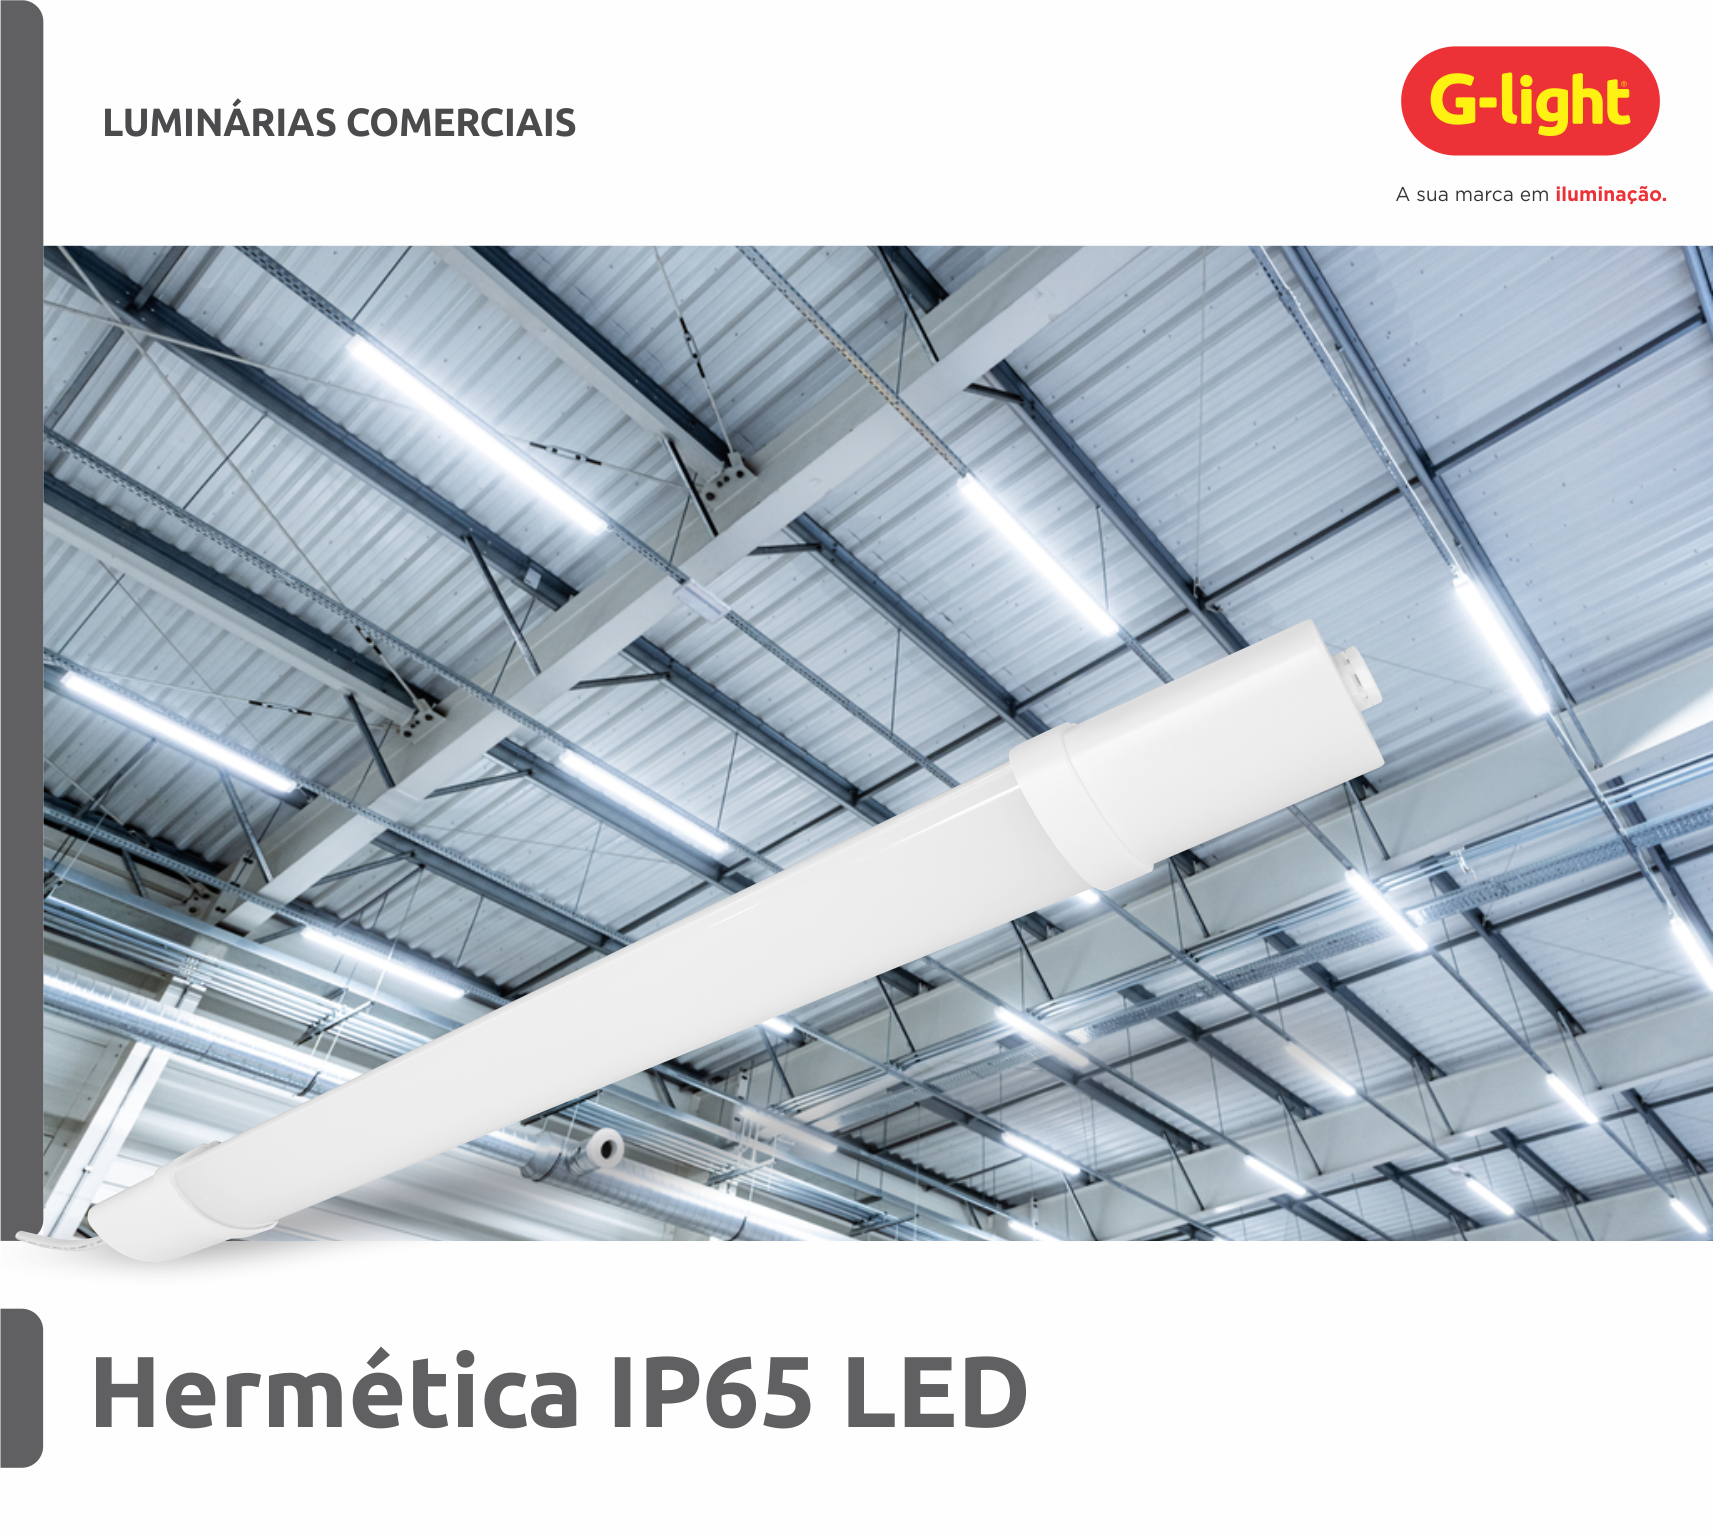 Hermética IP65 LED